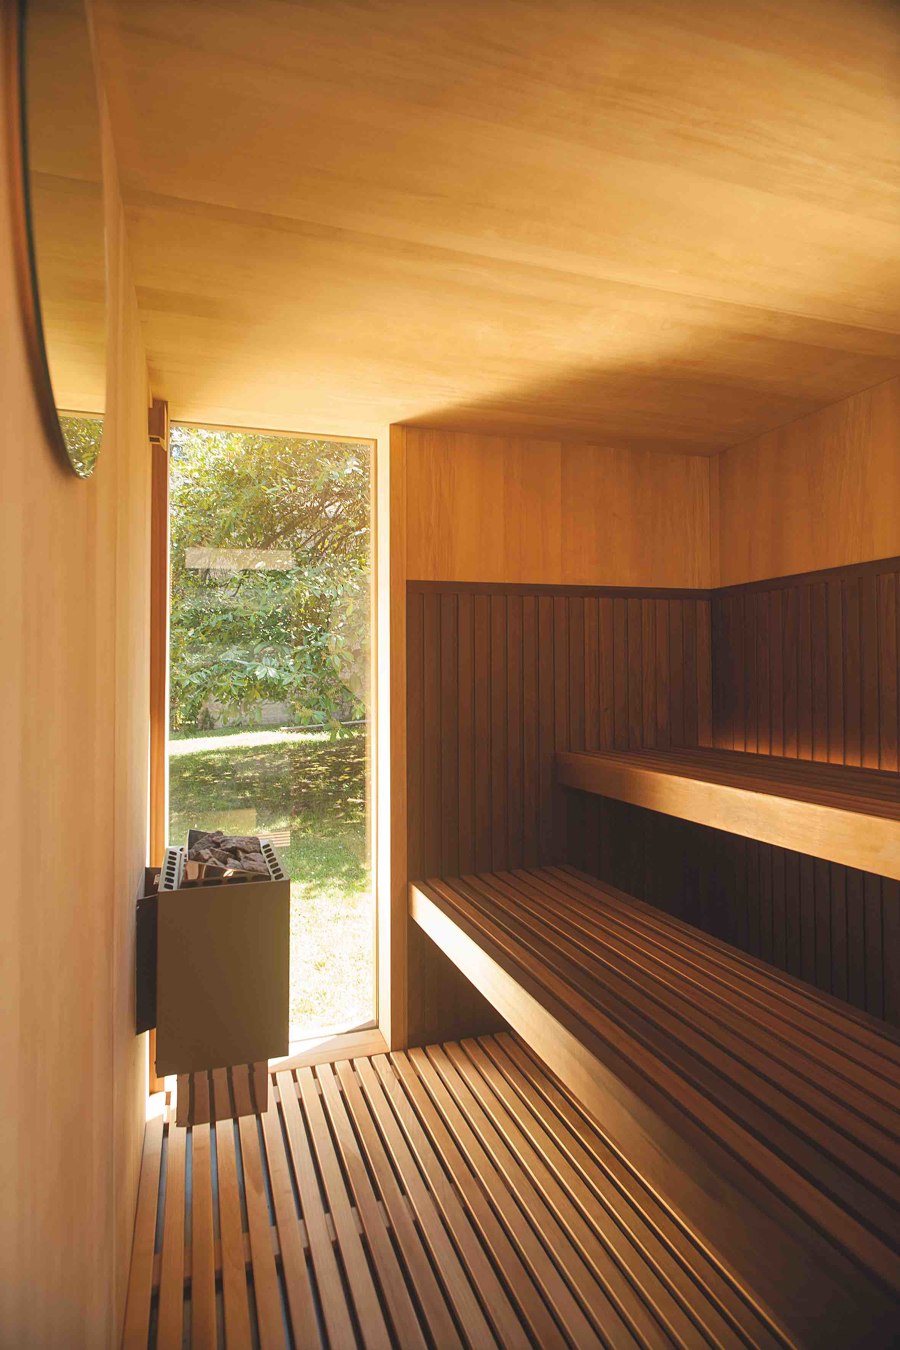 EFFE’s Cabanon outdoor sauna: Turning up the heat in the garden | Novità